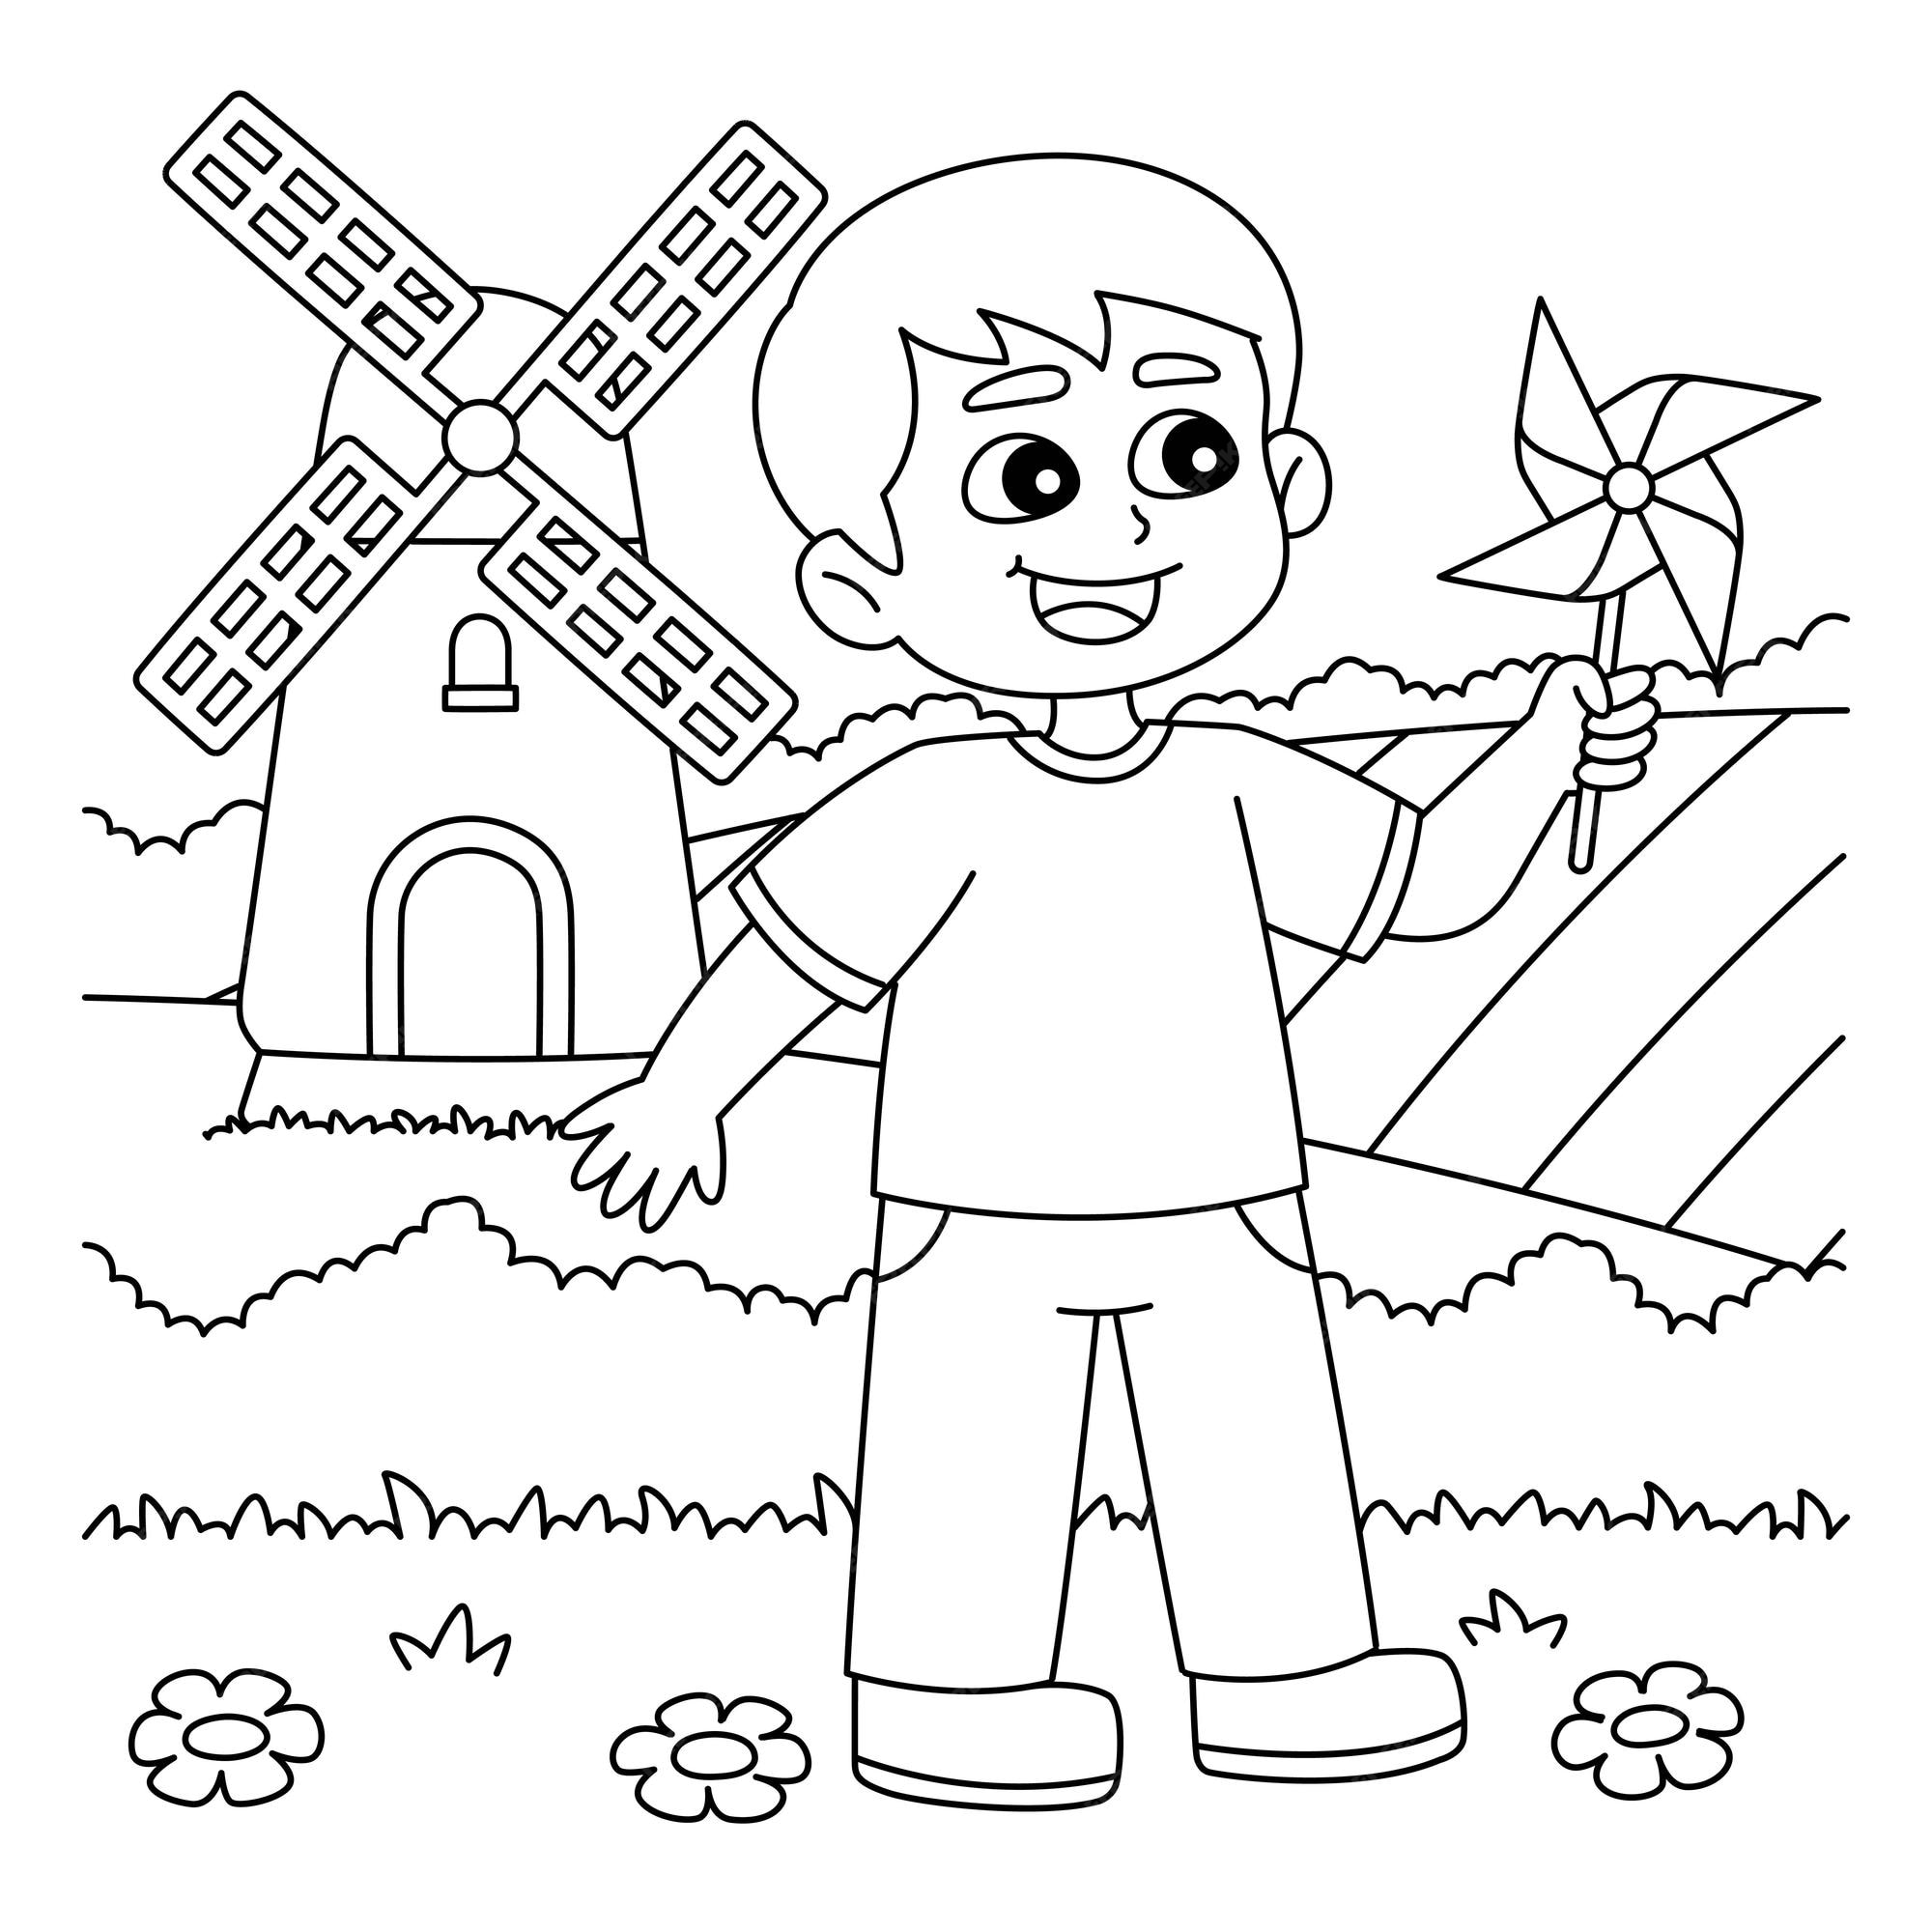 Premium vector spring boy holding a pinwheel coloring page